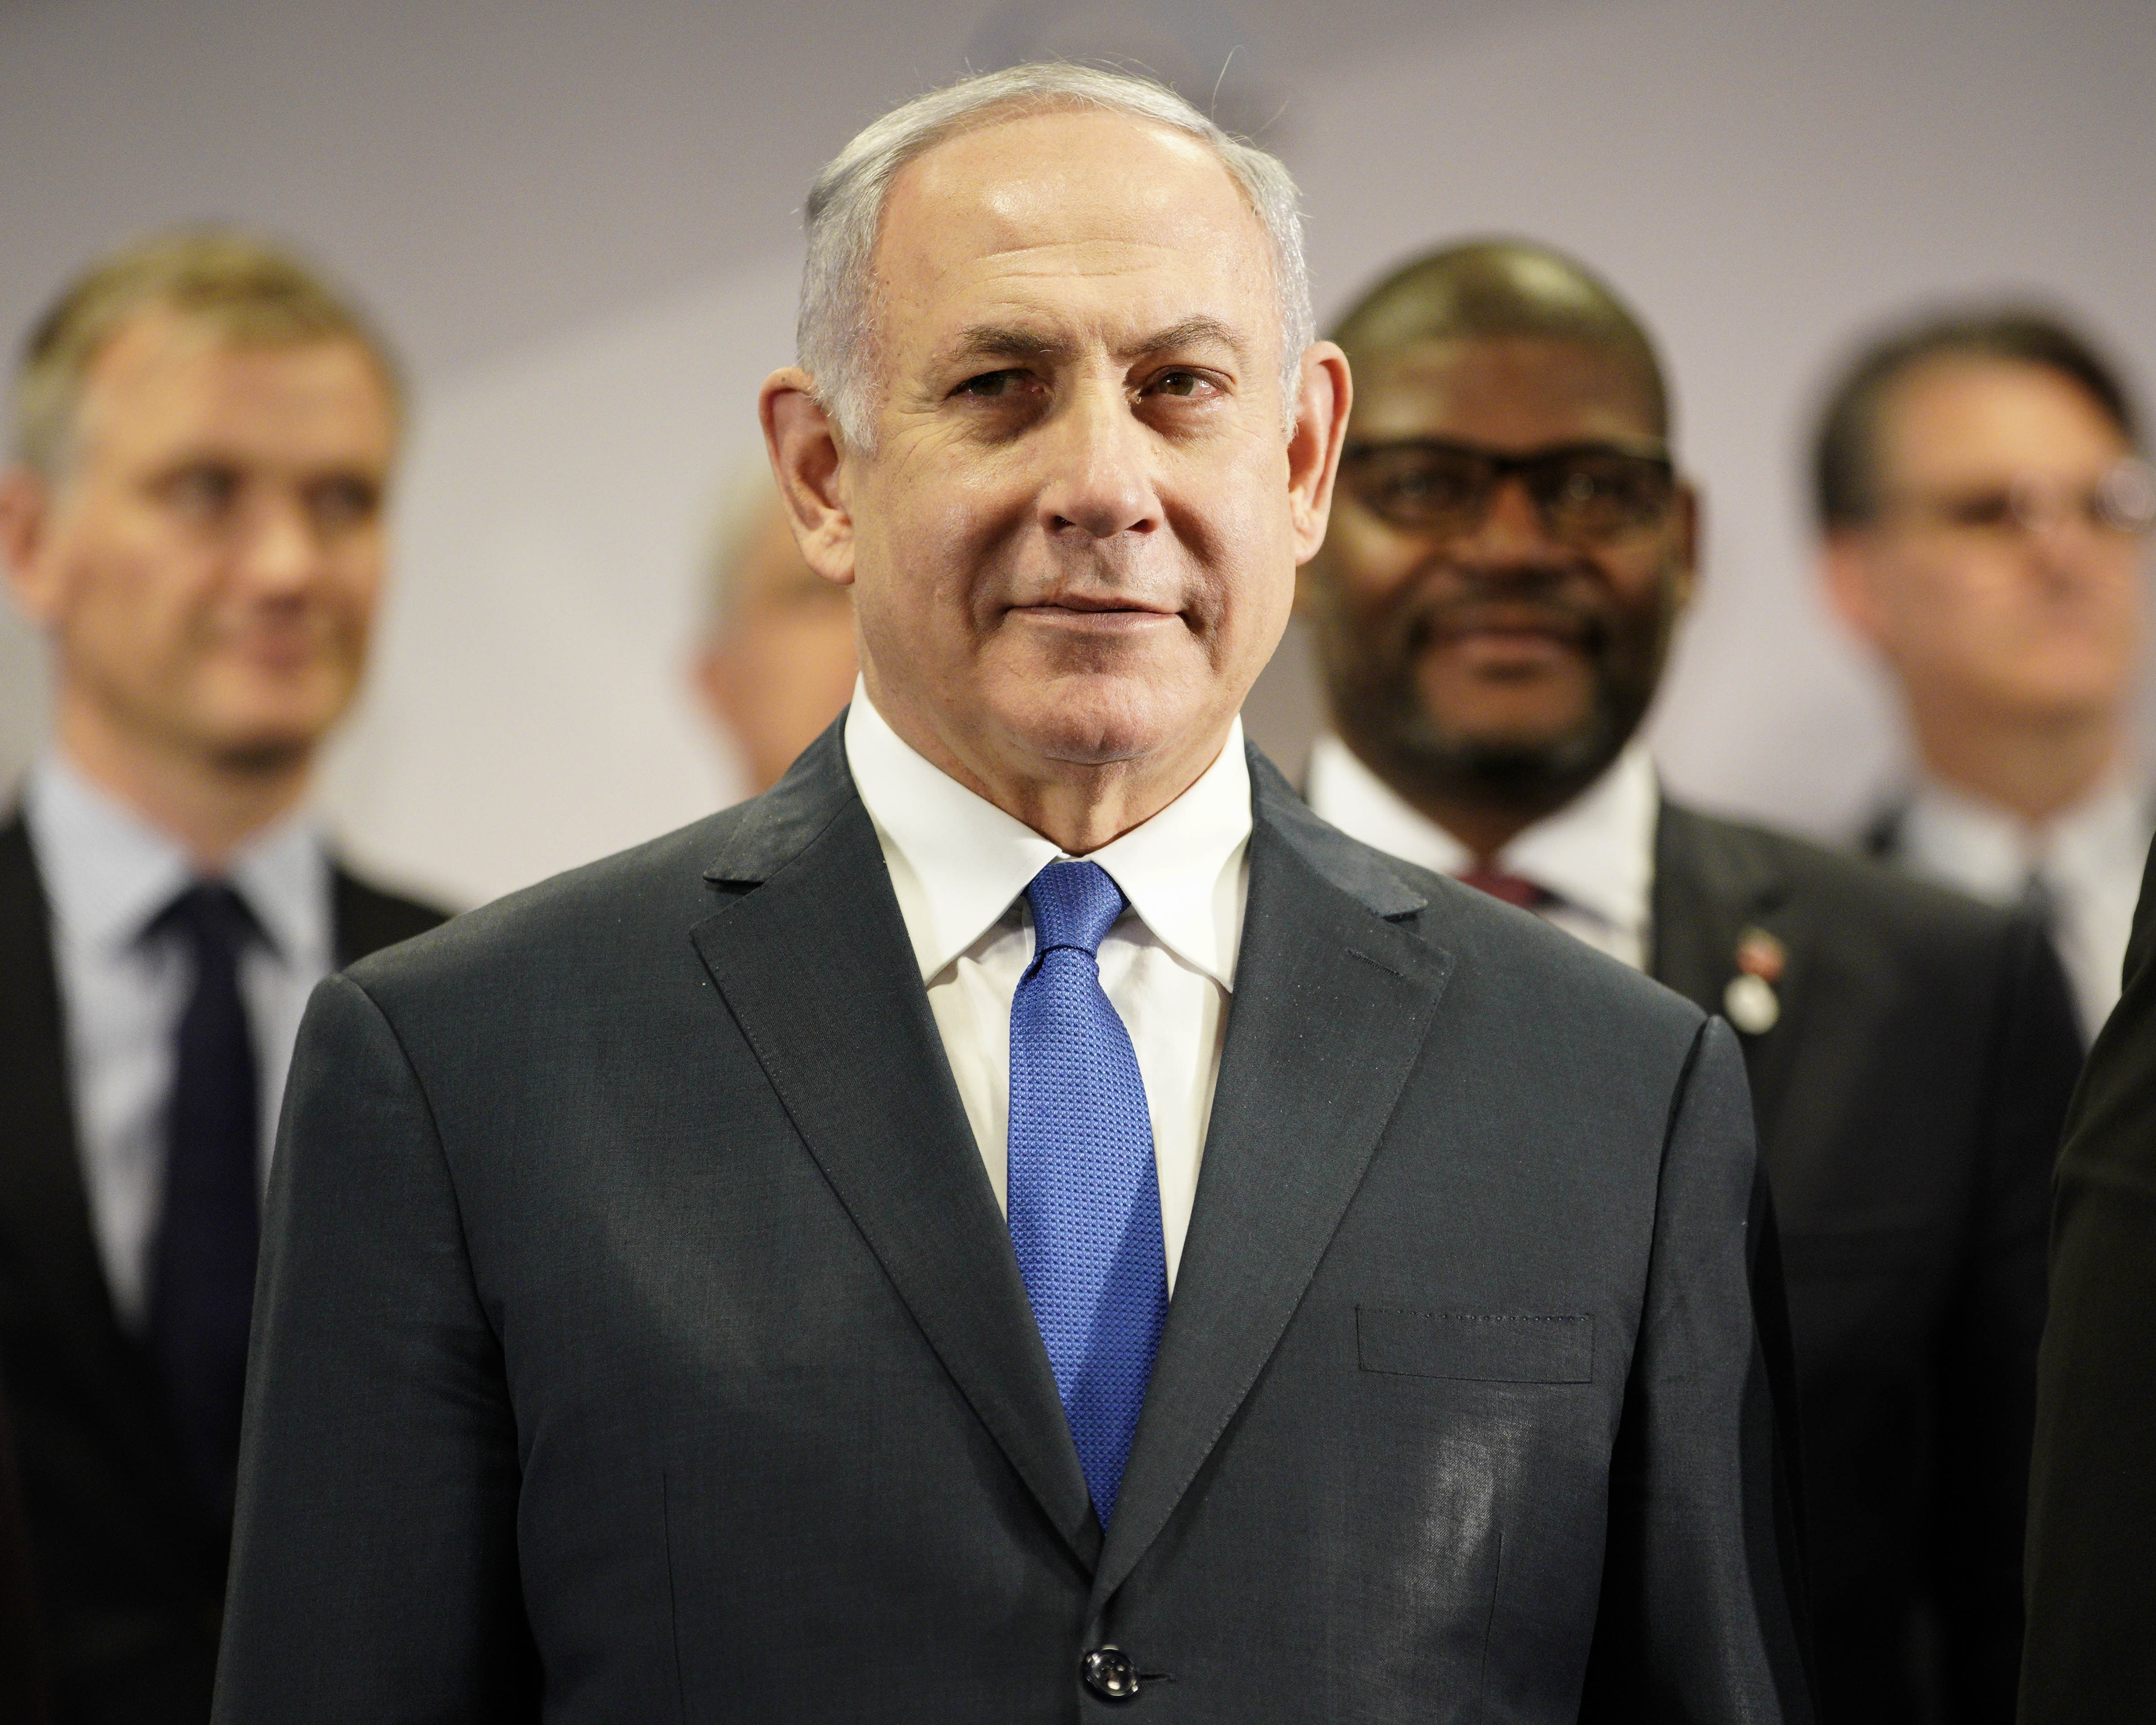 Gantz party rejects Netanyahu's offer of Israeli unity gov't